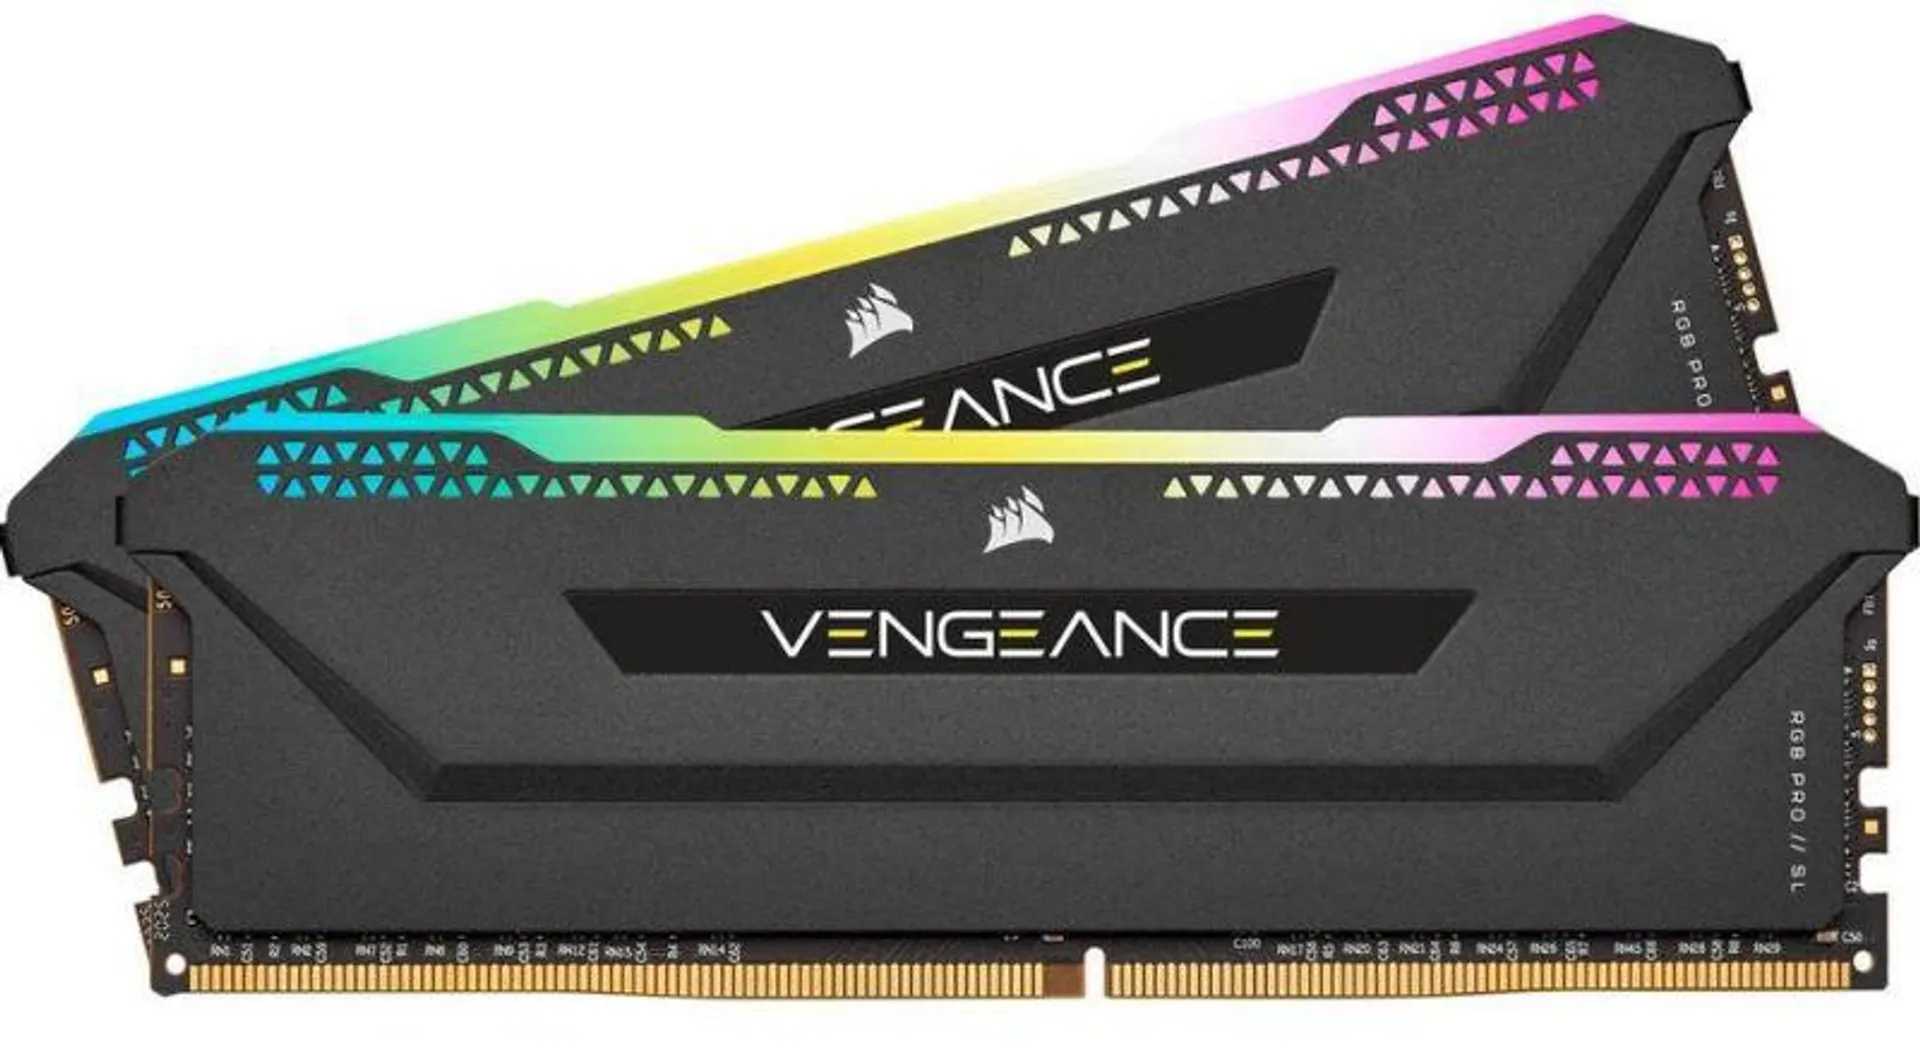 CORSAIR VENGEANCE RGB PRO SL 16GB DDR4 3600MHz Desktop Memory for Gaming